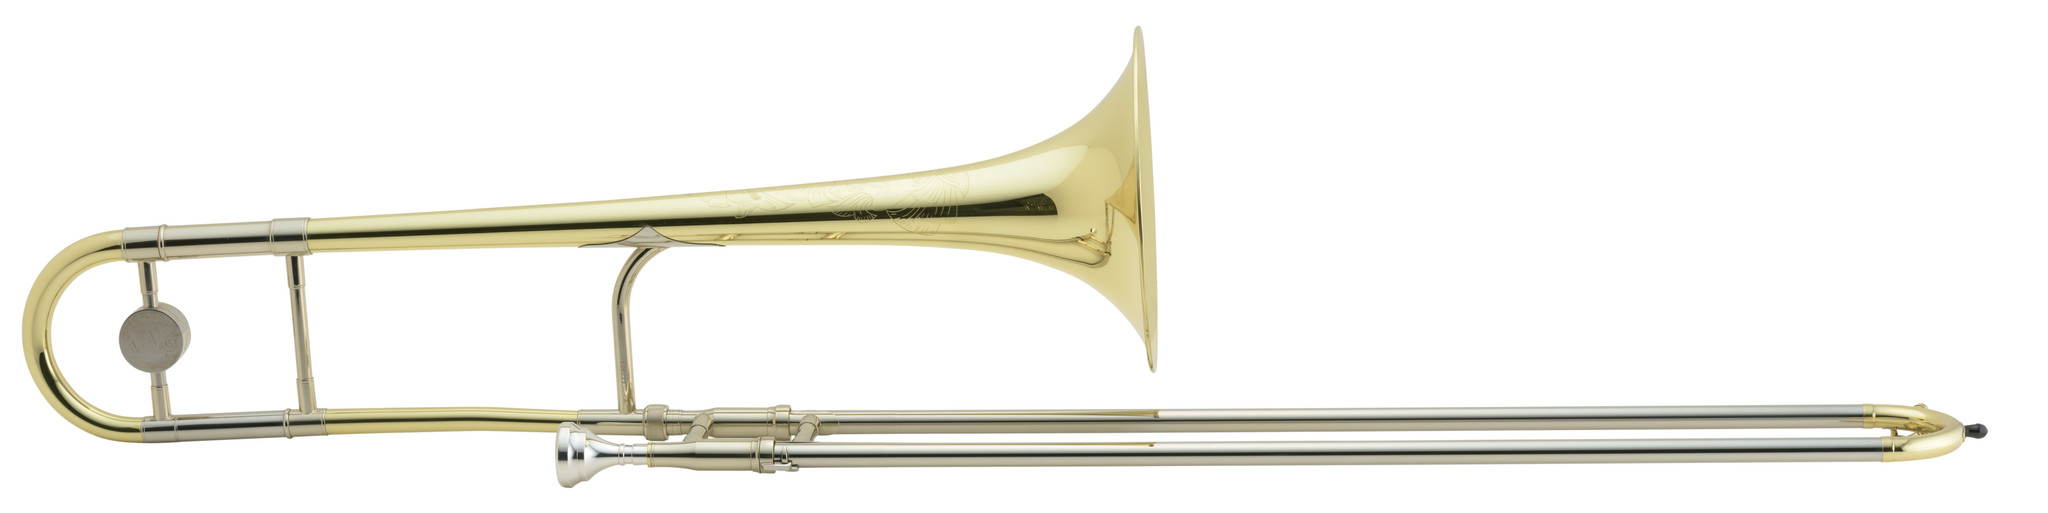 king 3b trombone